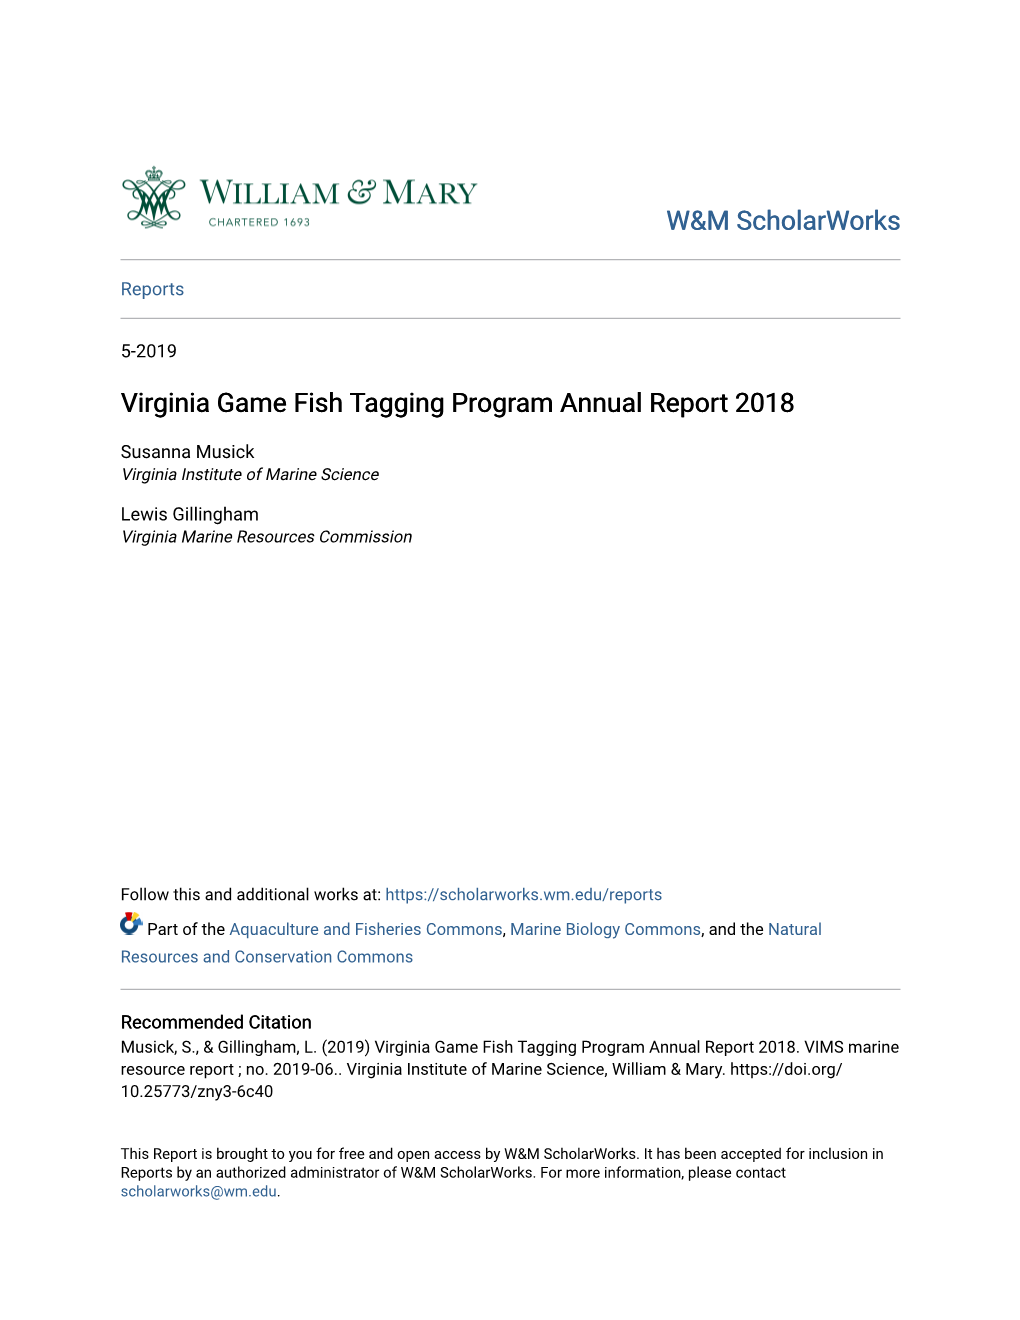 Virginia Game Fish Tagging Program Annual Report 2018